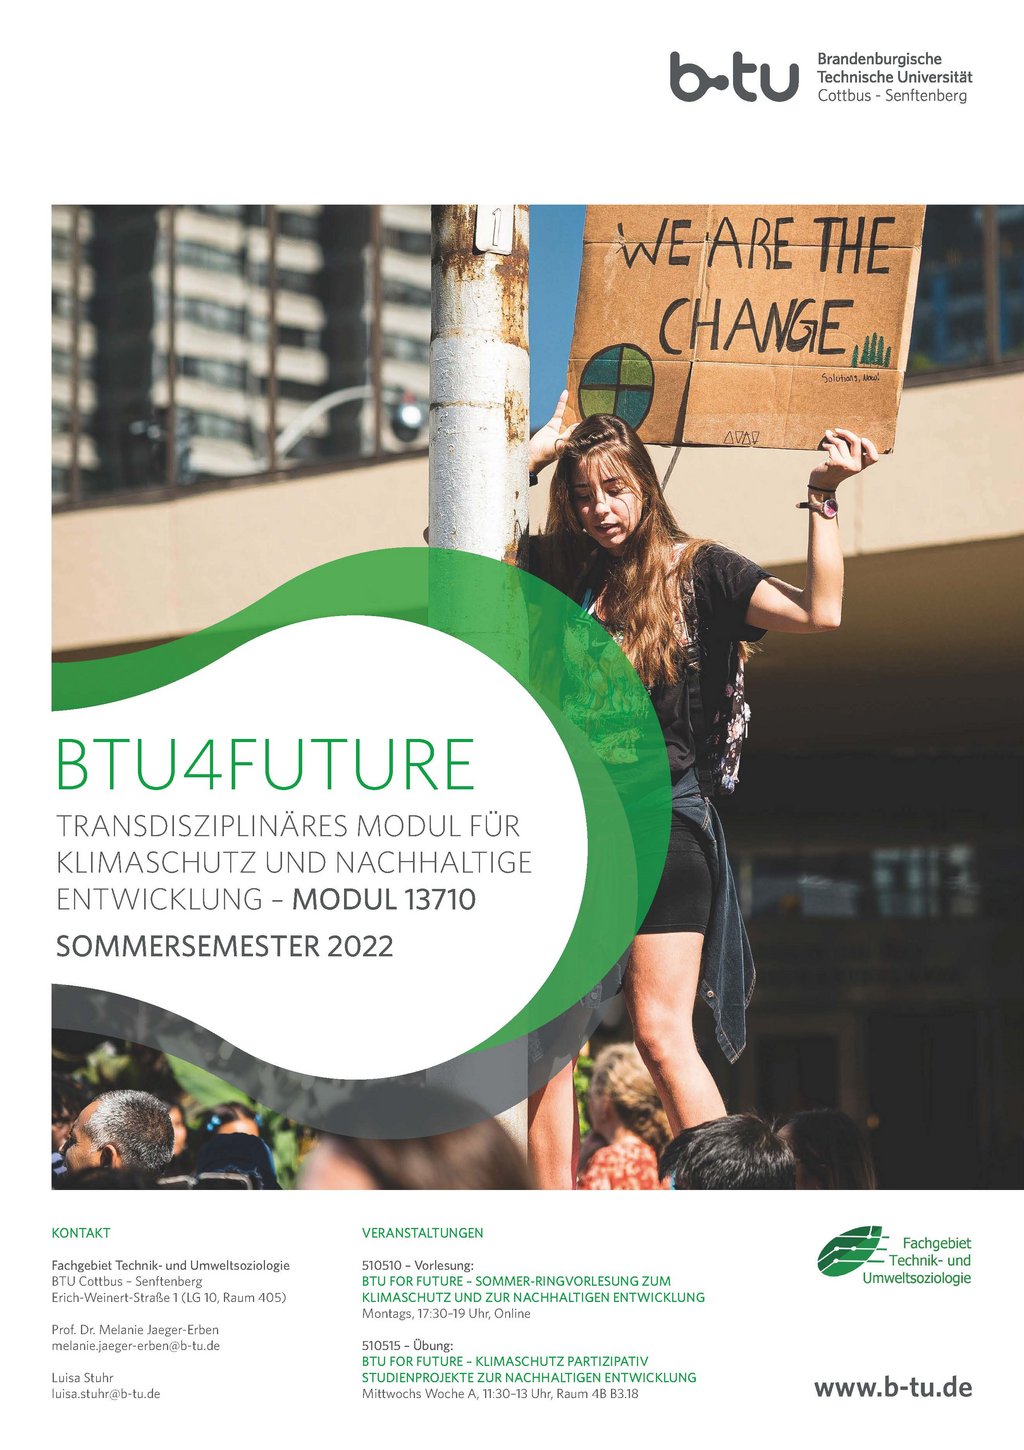 Poster for the module BTU4Future